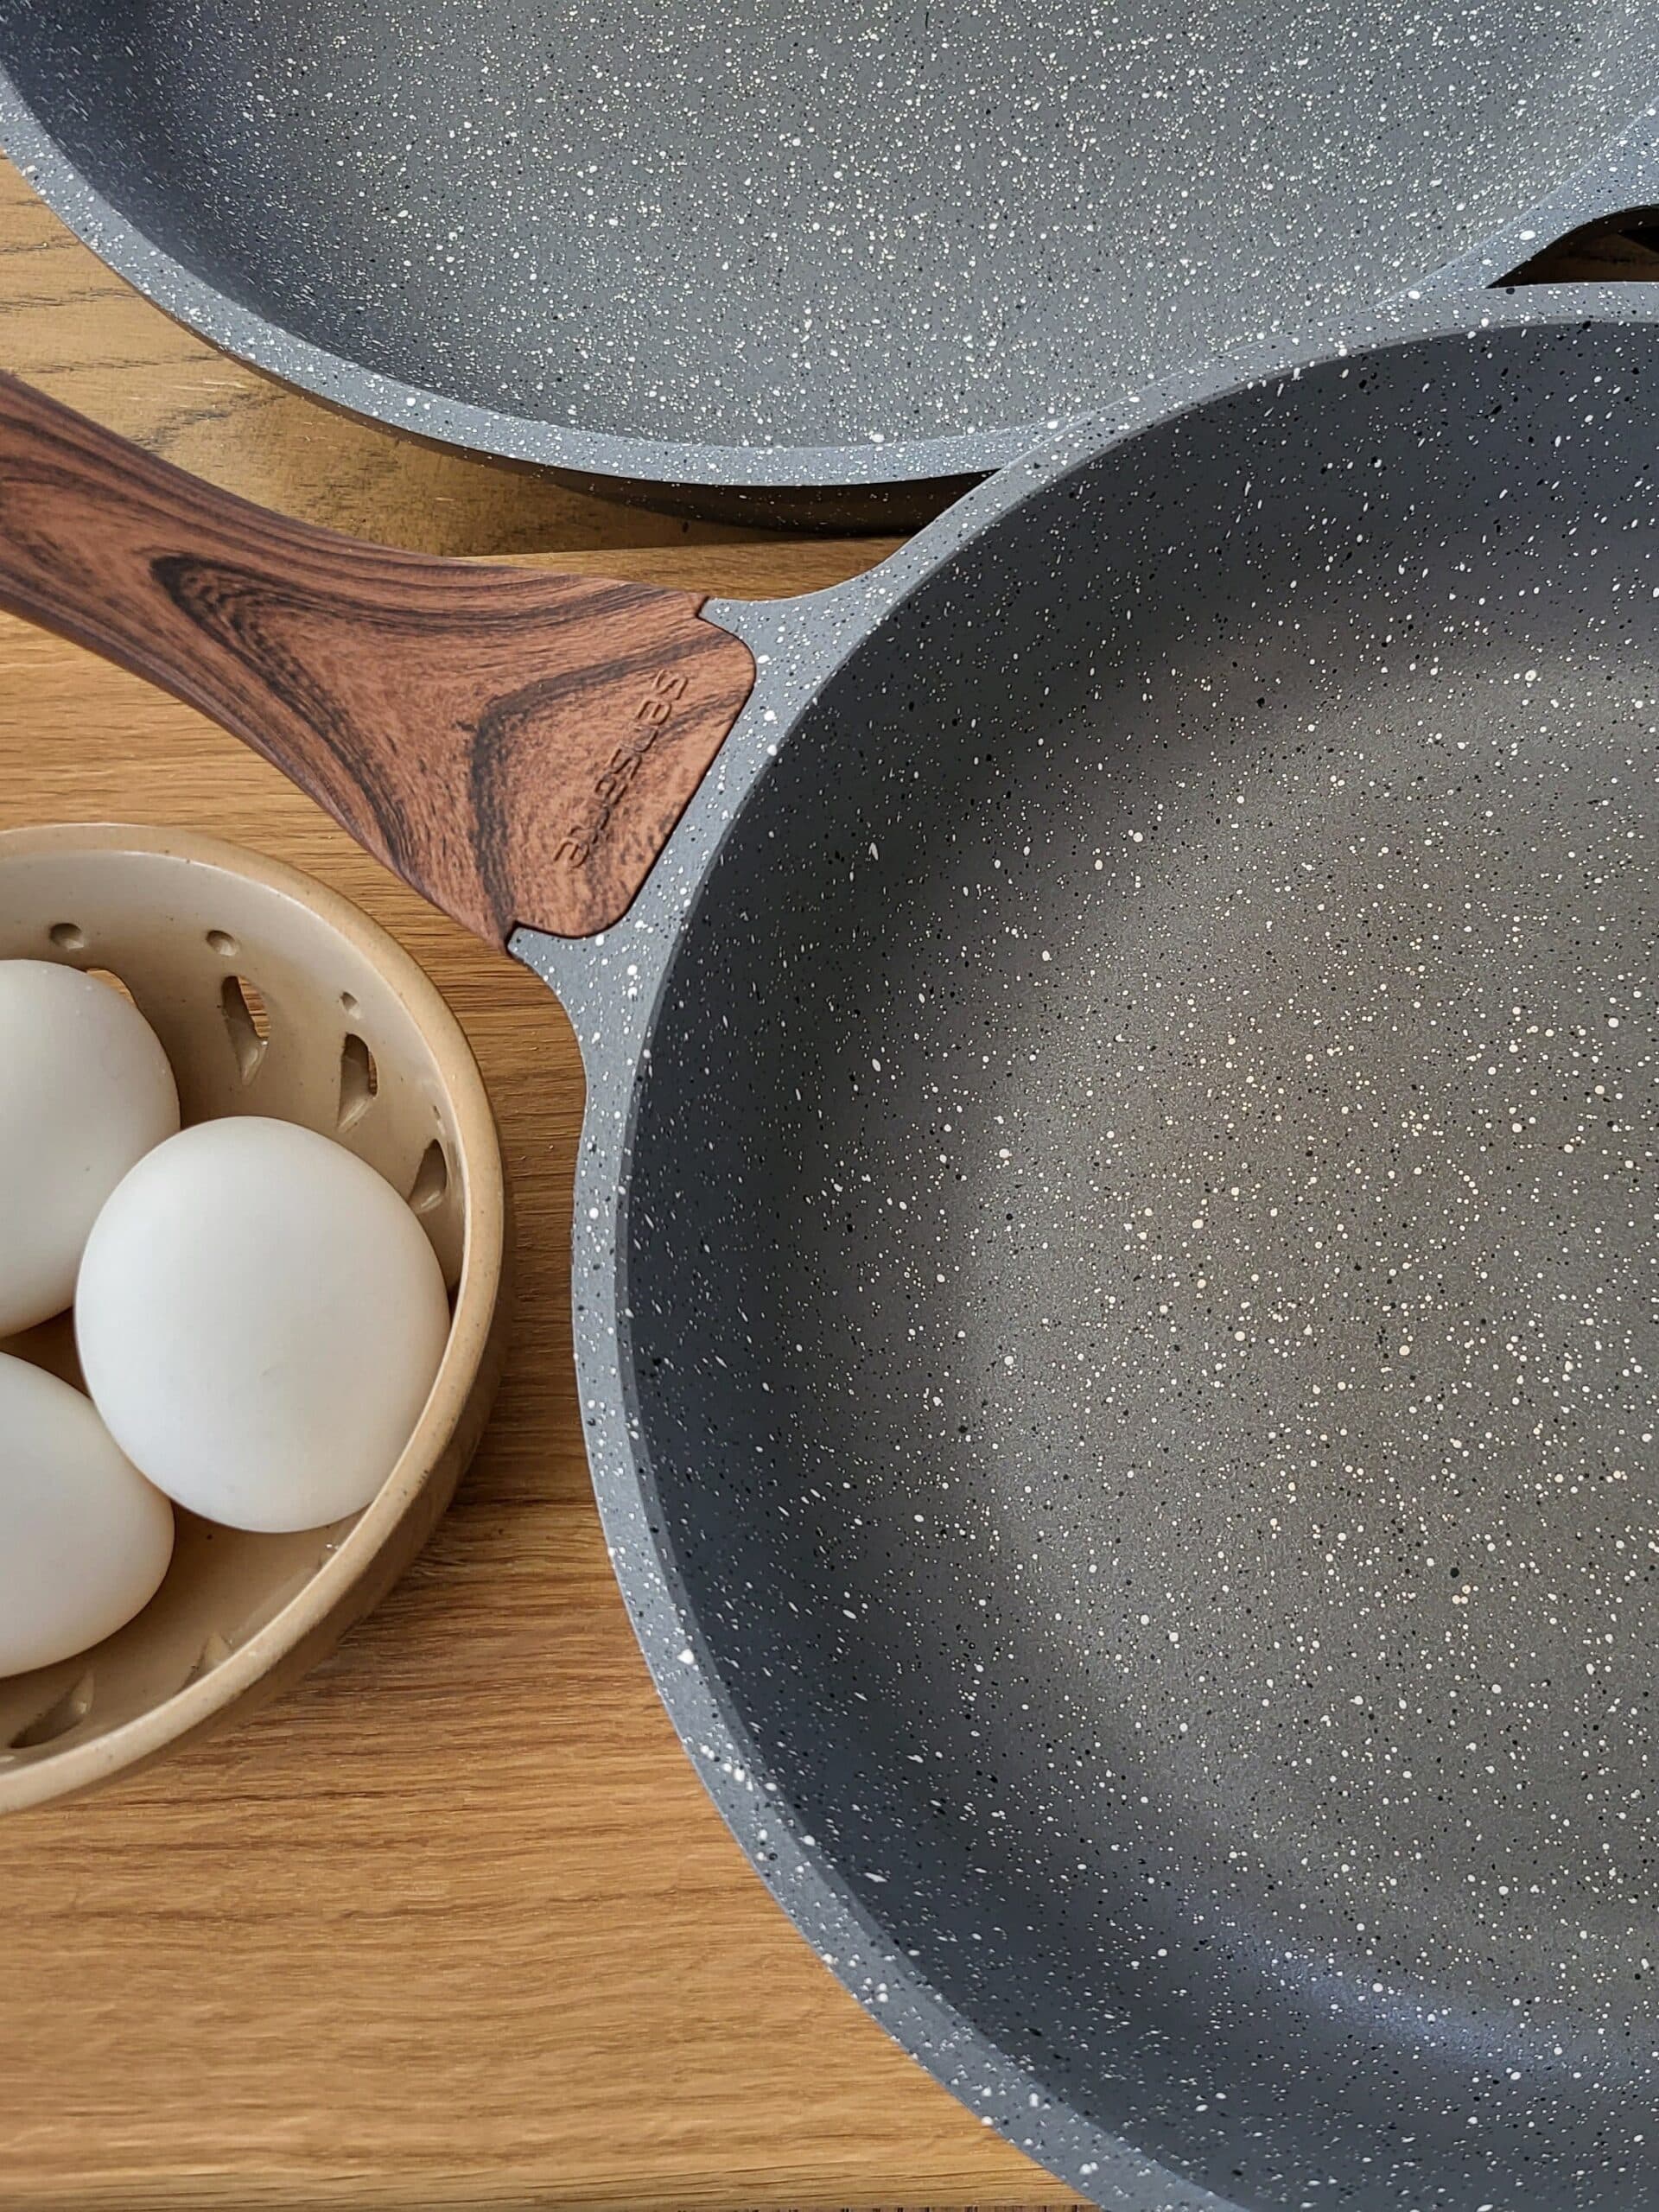 Sensarte Review: A Safe and Durable Frying Pan